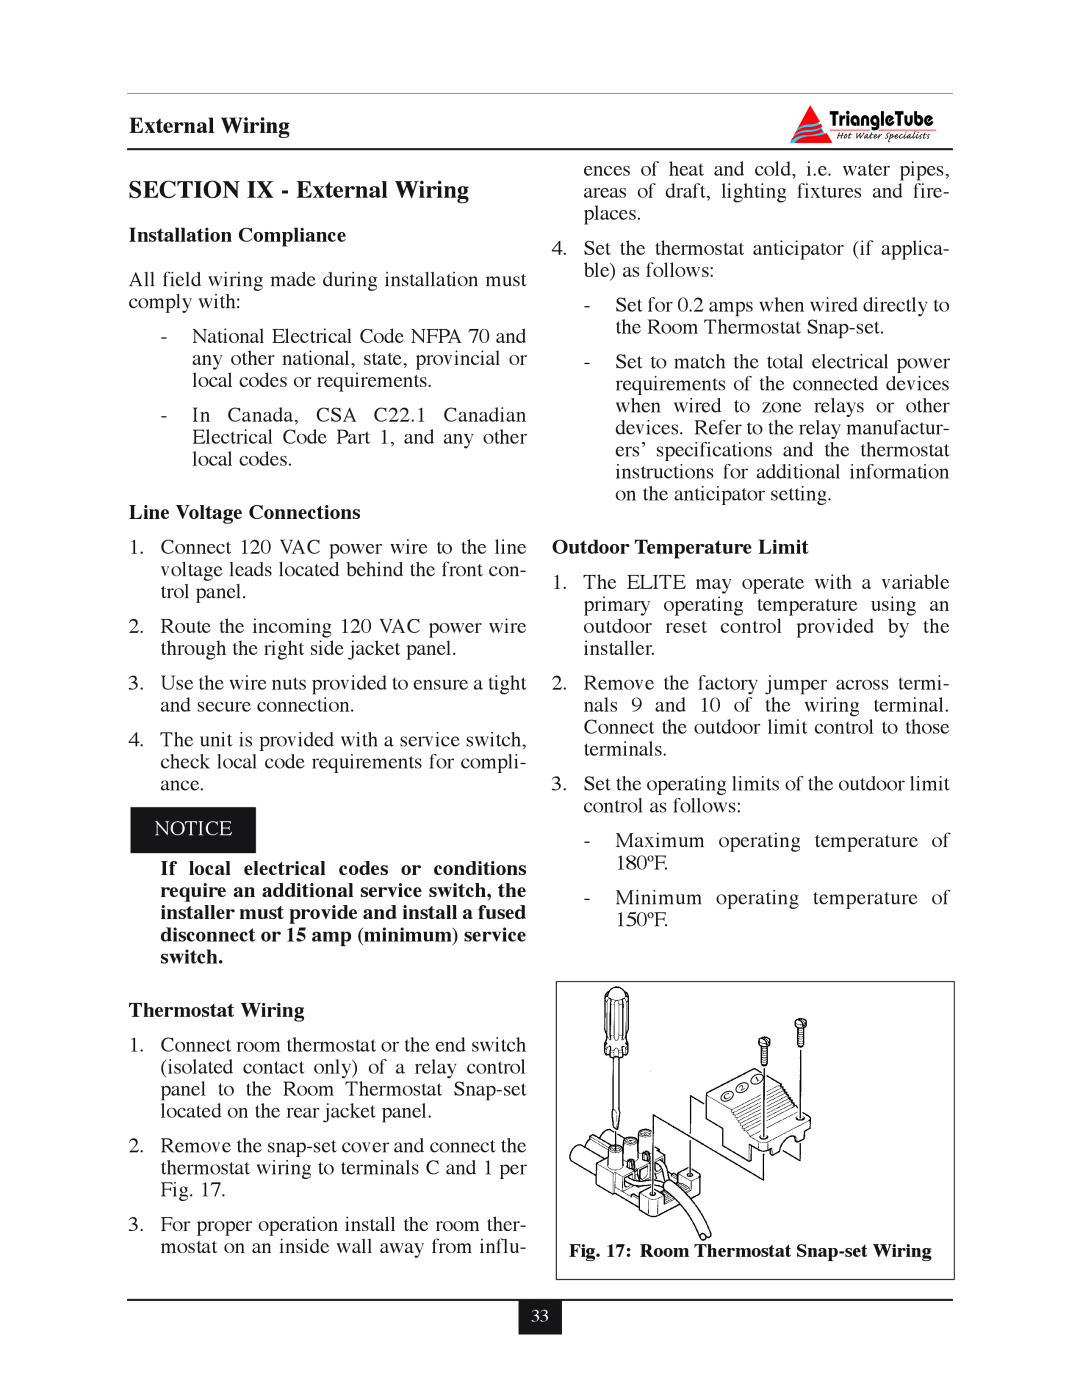 Delta 45, F-25, 35, 30, 40 warranty SECTION IX - External Wiring, Notice 